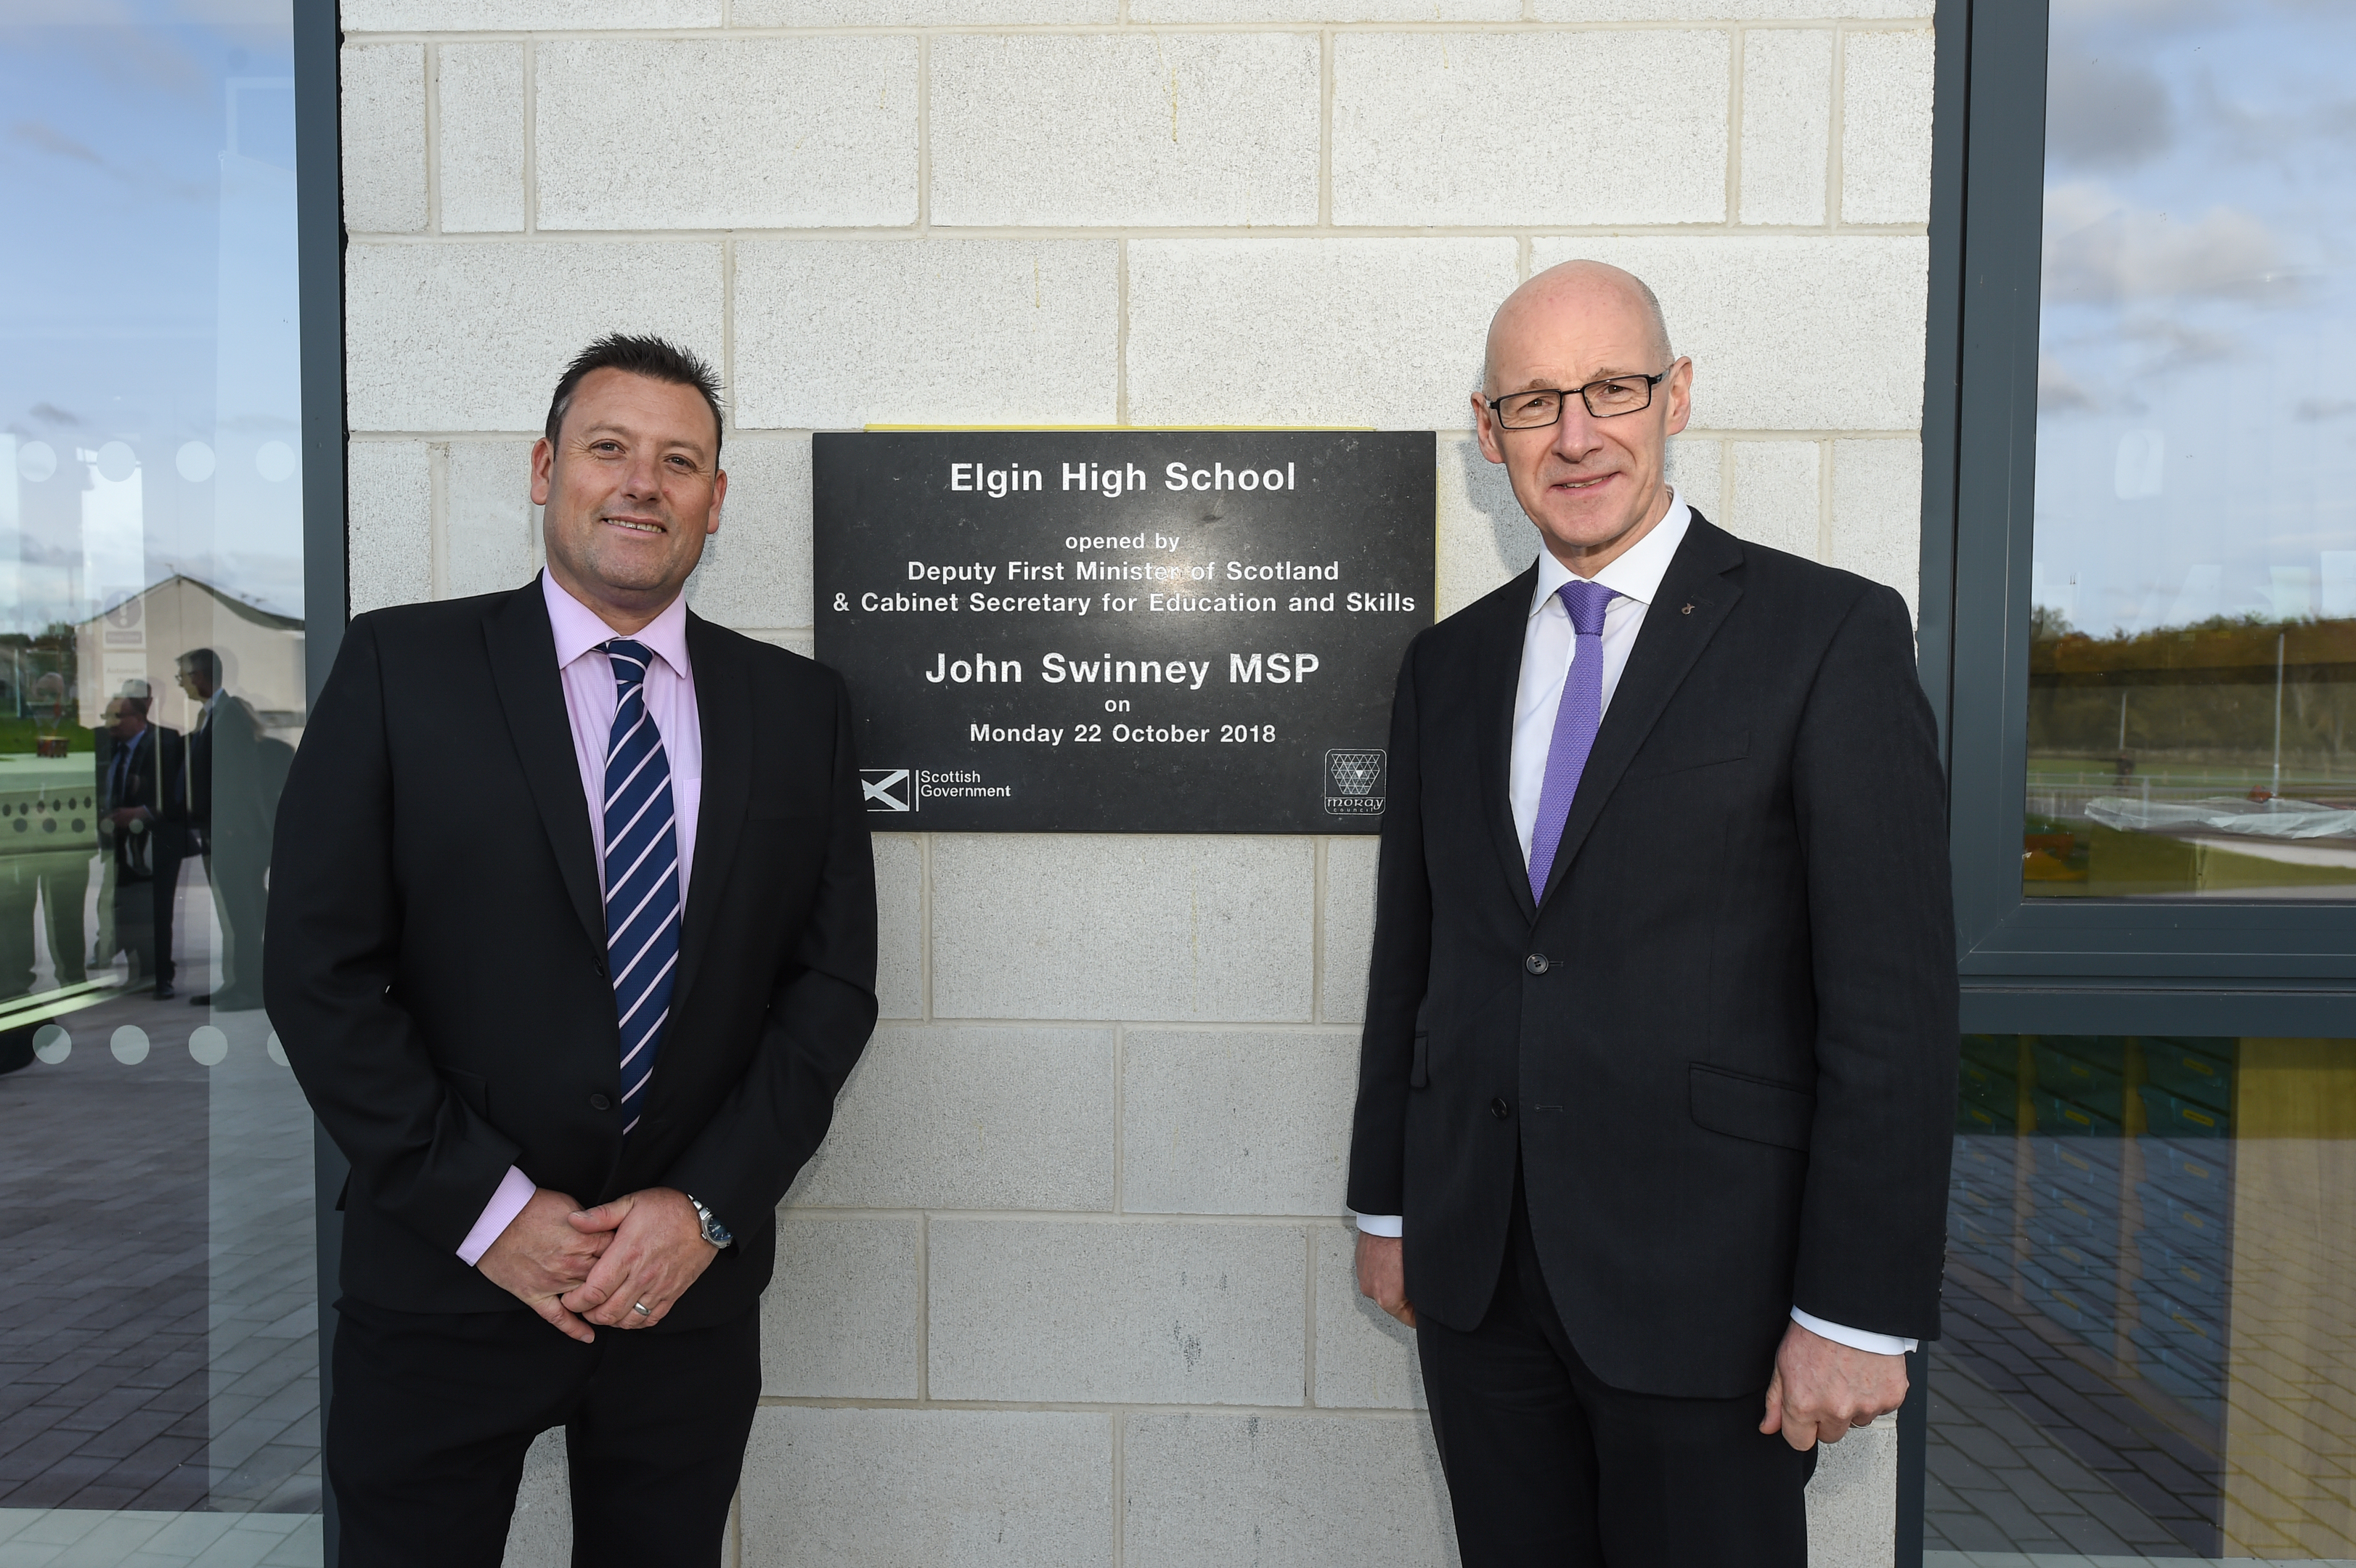 Head teacher Hugh McCulloch and Deputy First Minister John Swinney at the official opening of Elgin High School.